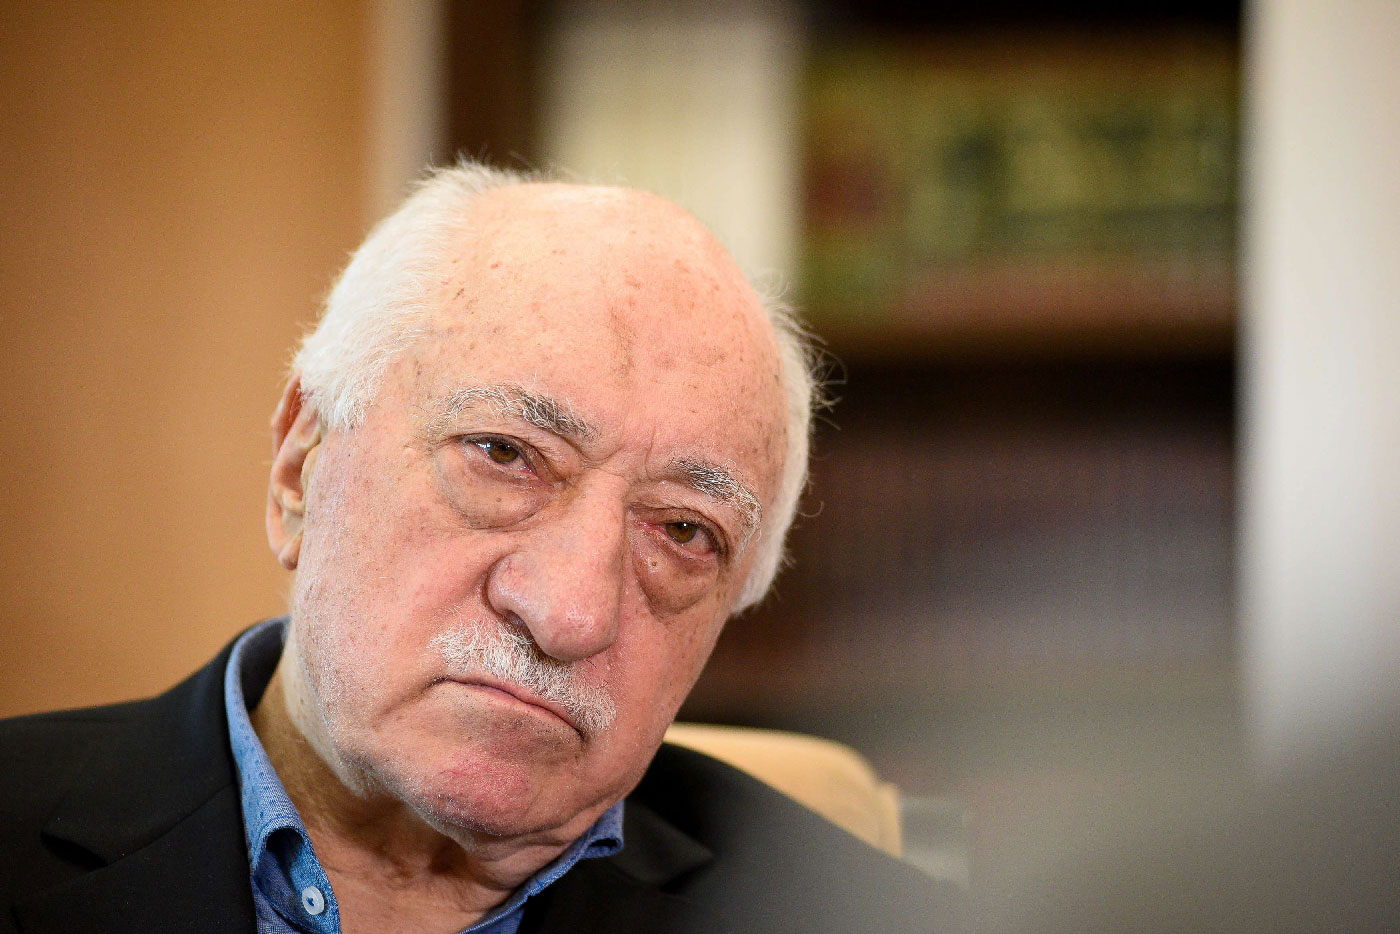 Ankara has cracked down on suspected followers of Fethullah Gulen